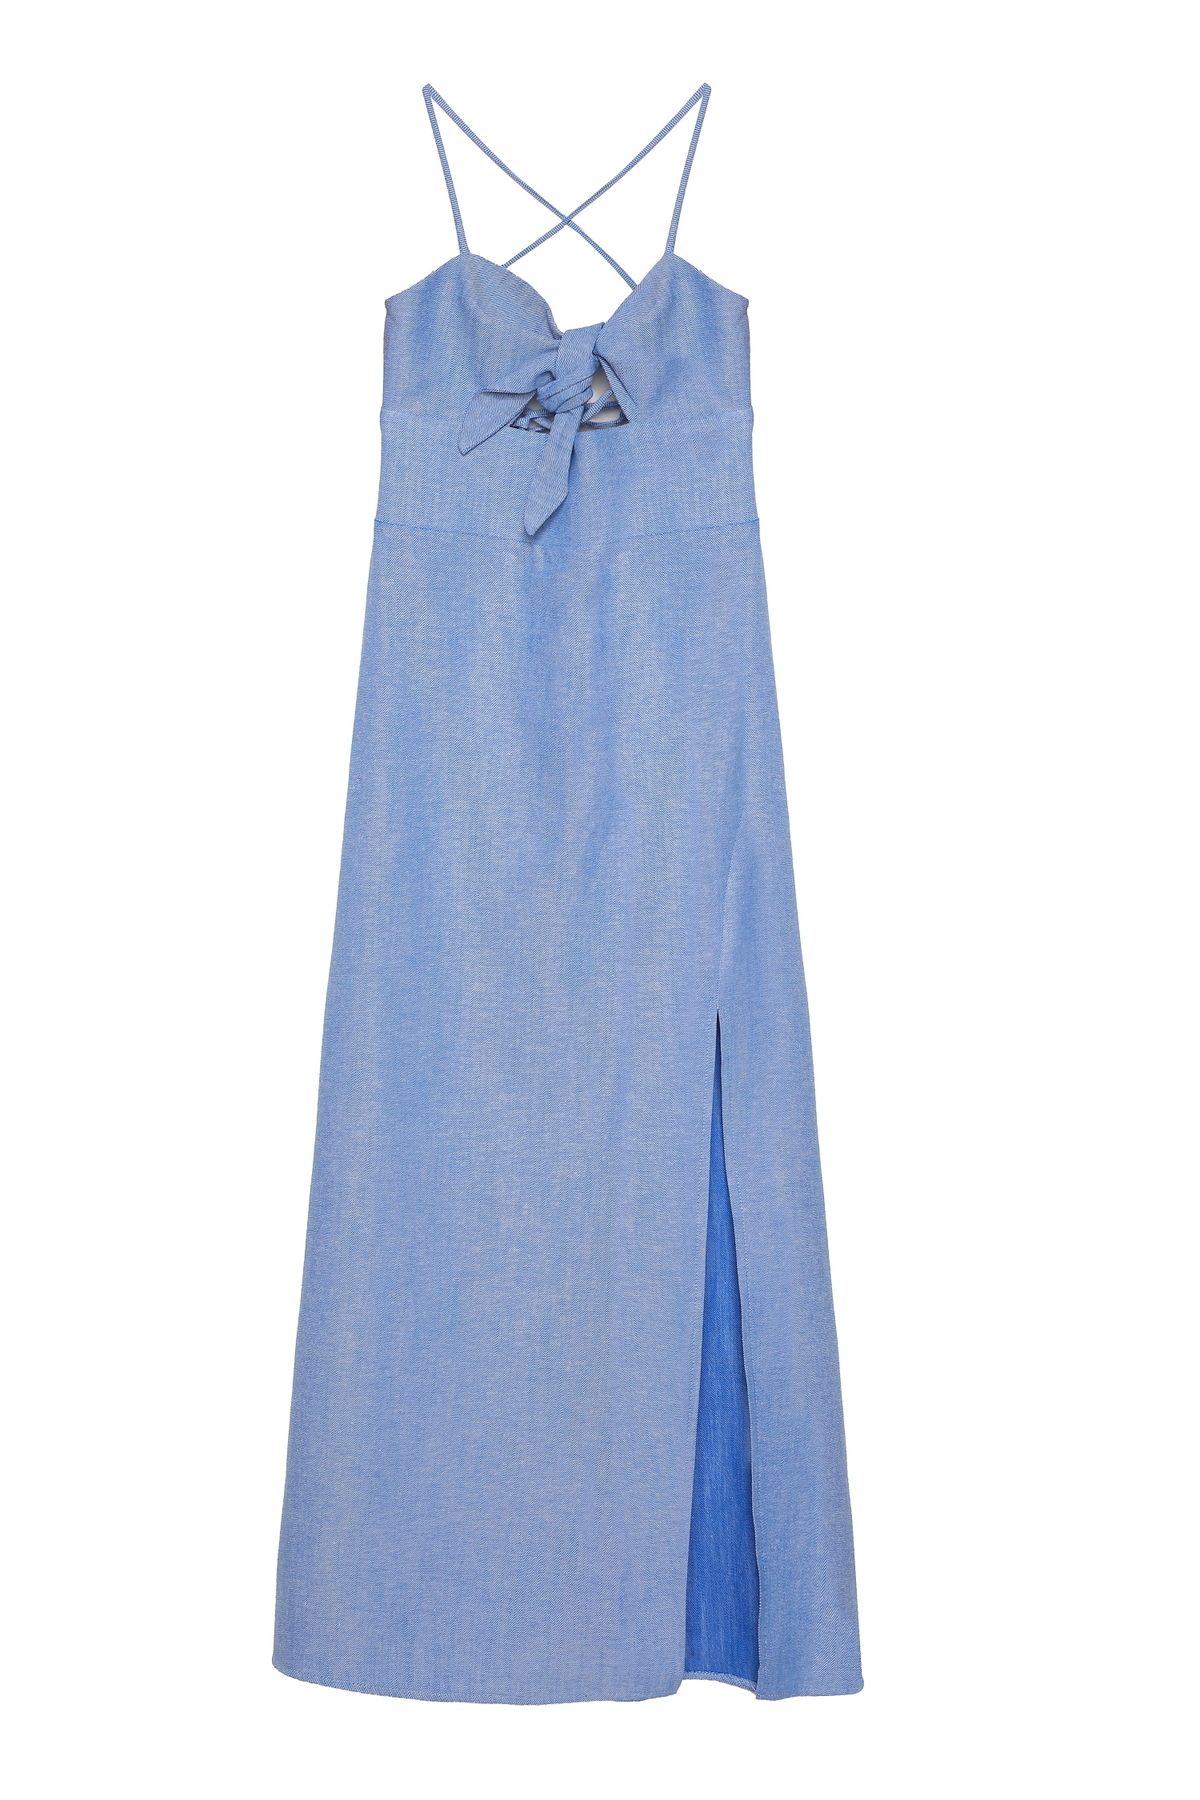 Quzu Sırtı İp Bağlama Detaylı Yırtmaçlı Elbise Mavi